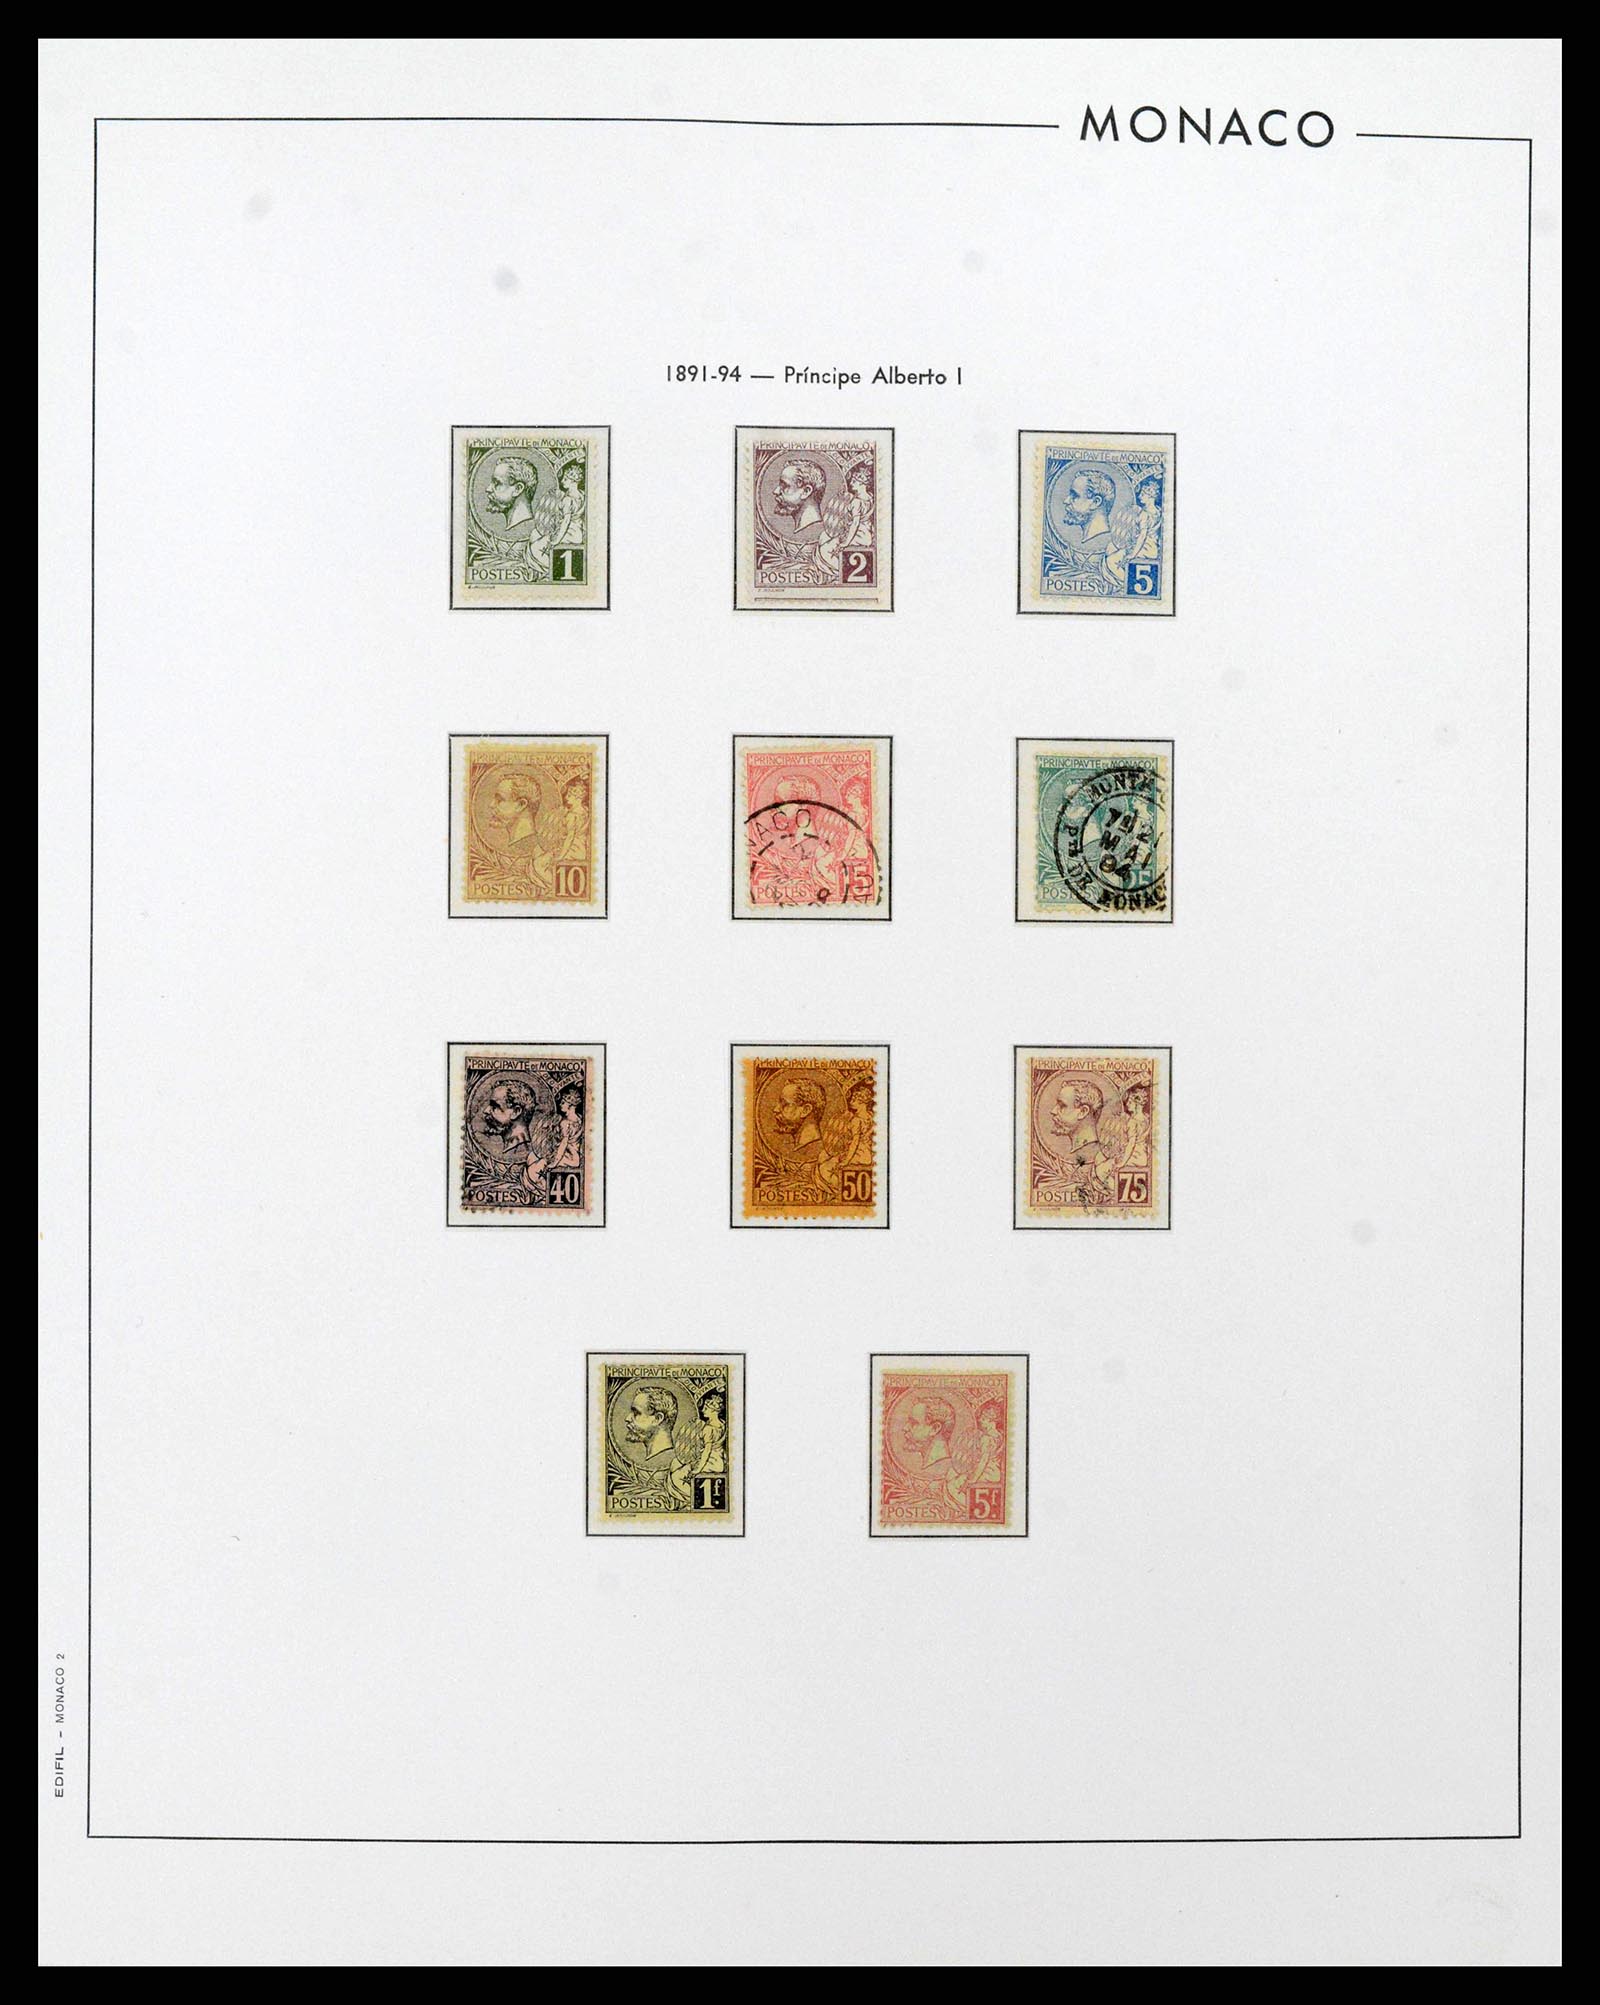 38283 0002 - Stamp collection 38283 Monaco 1885-1989.